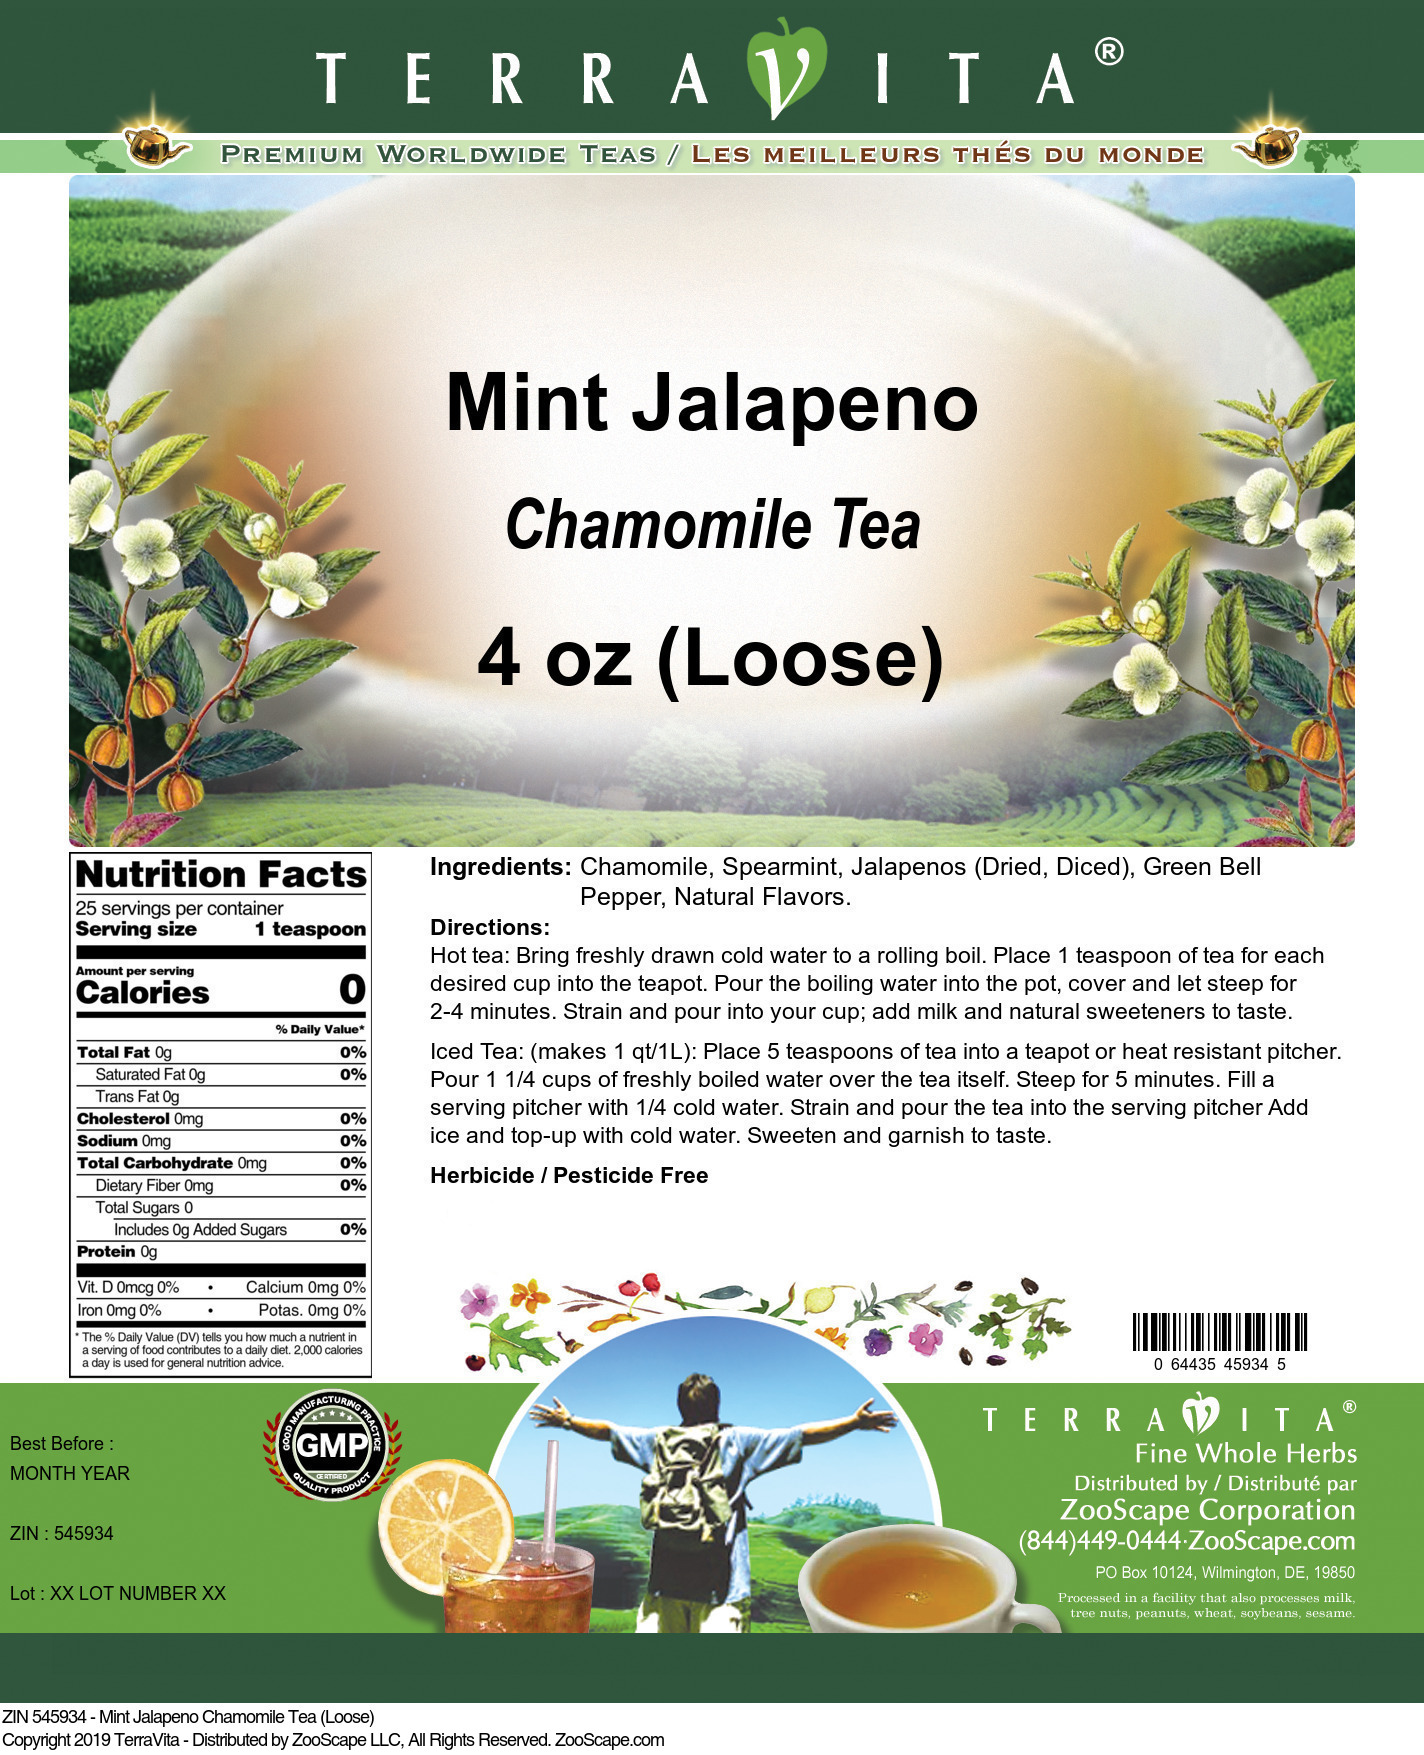 Mint Jalapeno Chamomile Tea (Loose) - Label